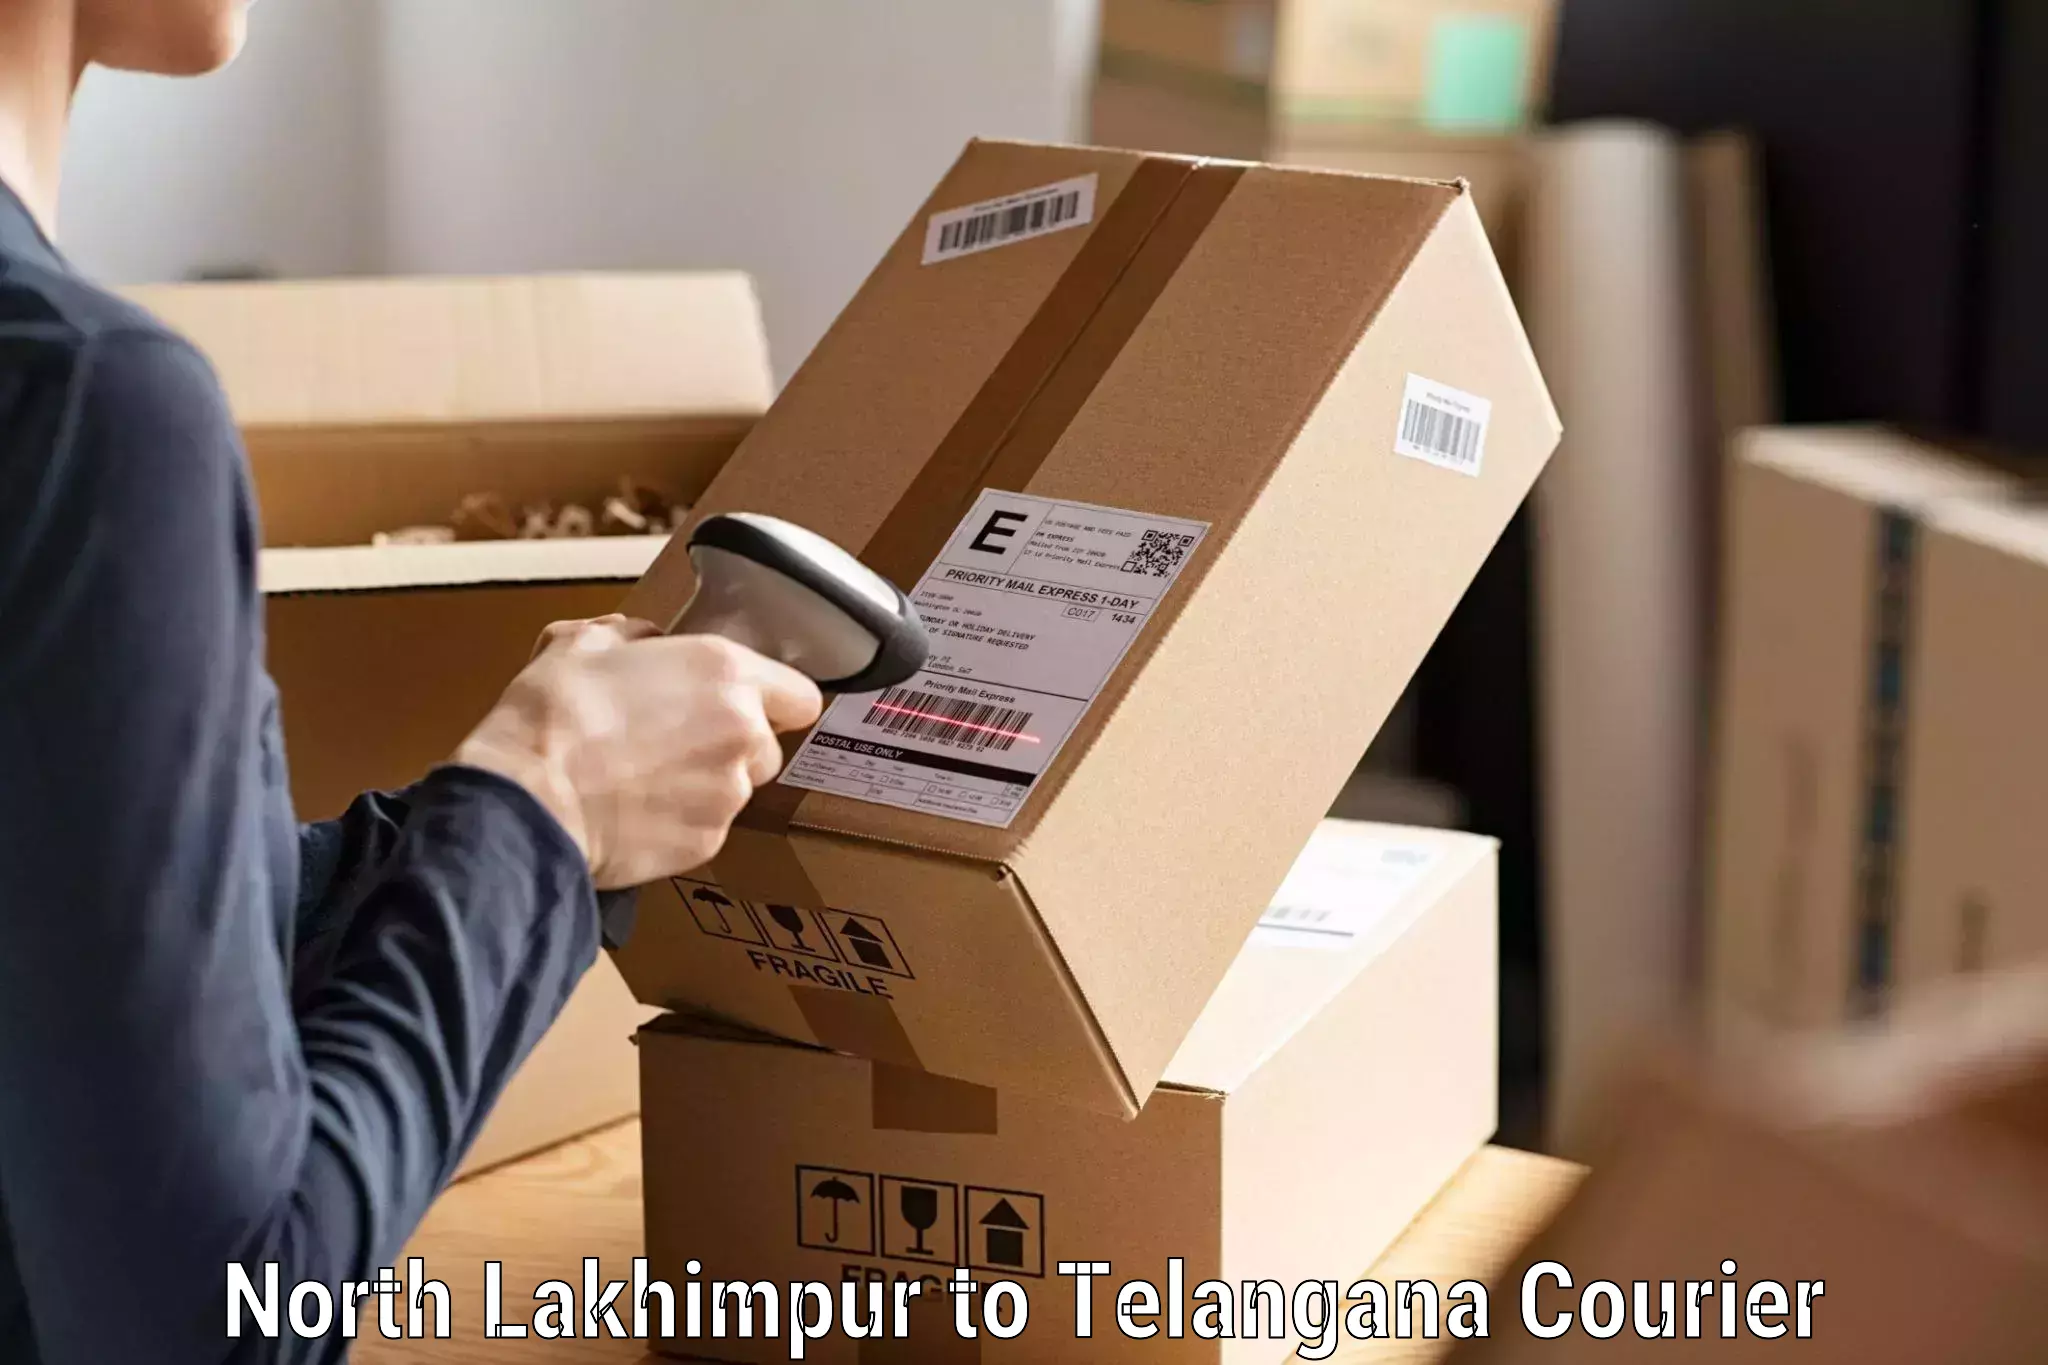 Reliable logistics providers North Lakhimpur to Narmetta